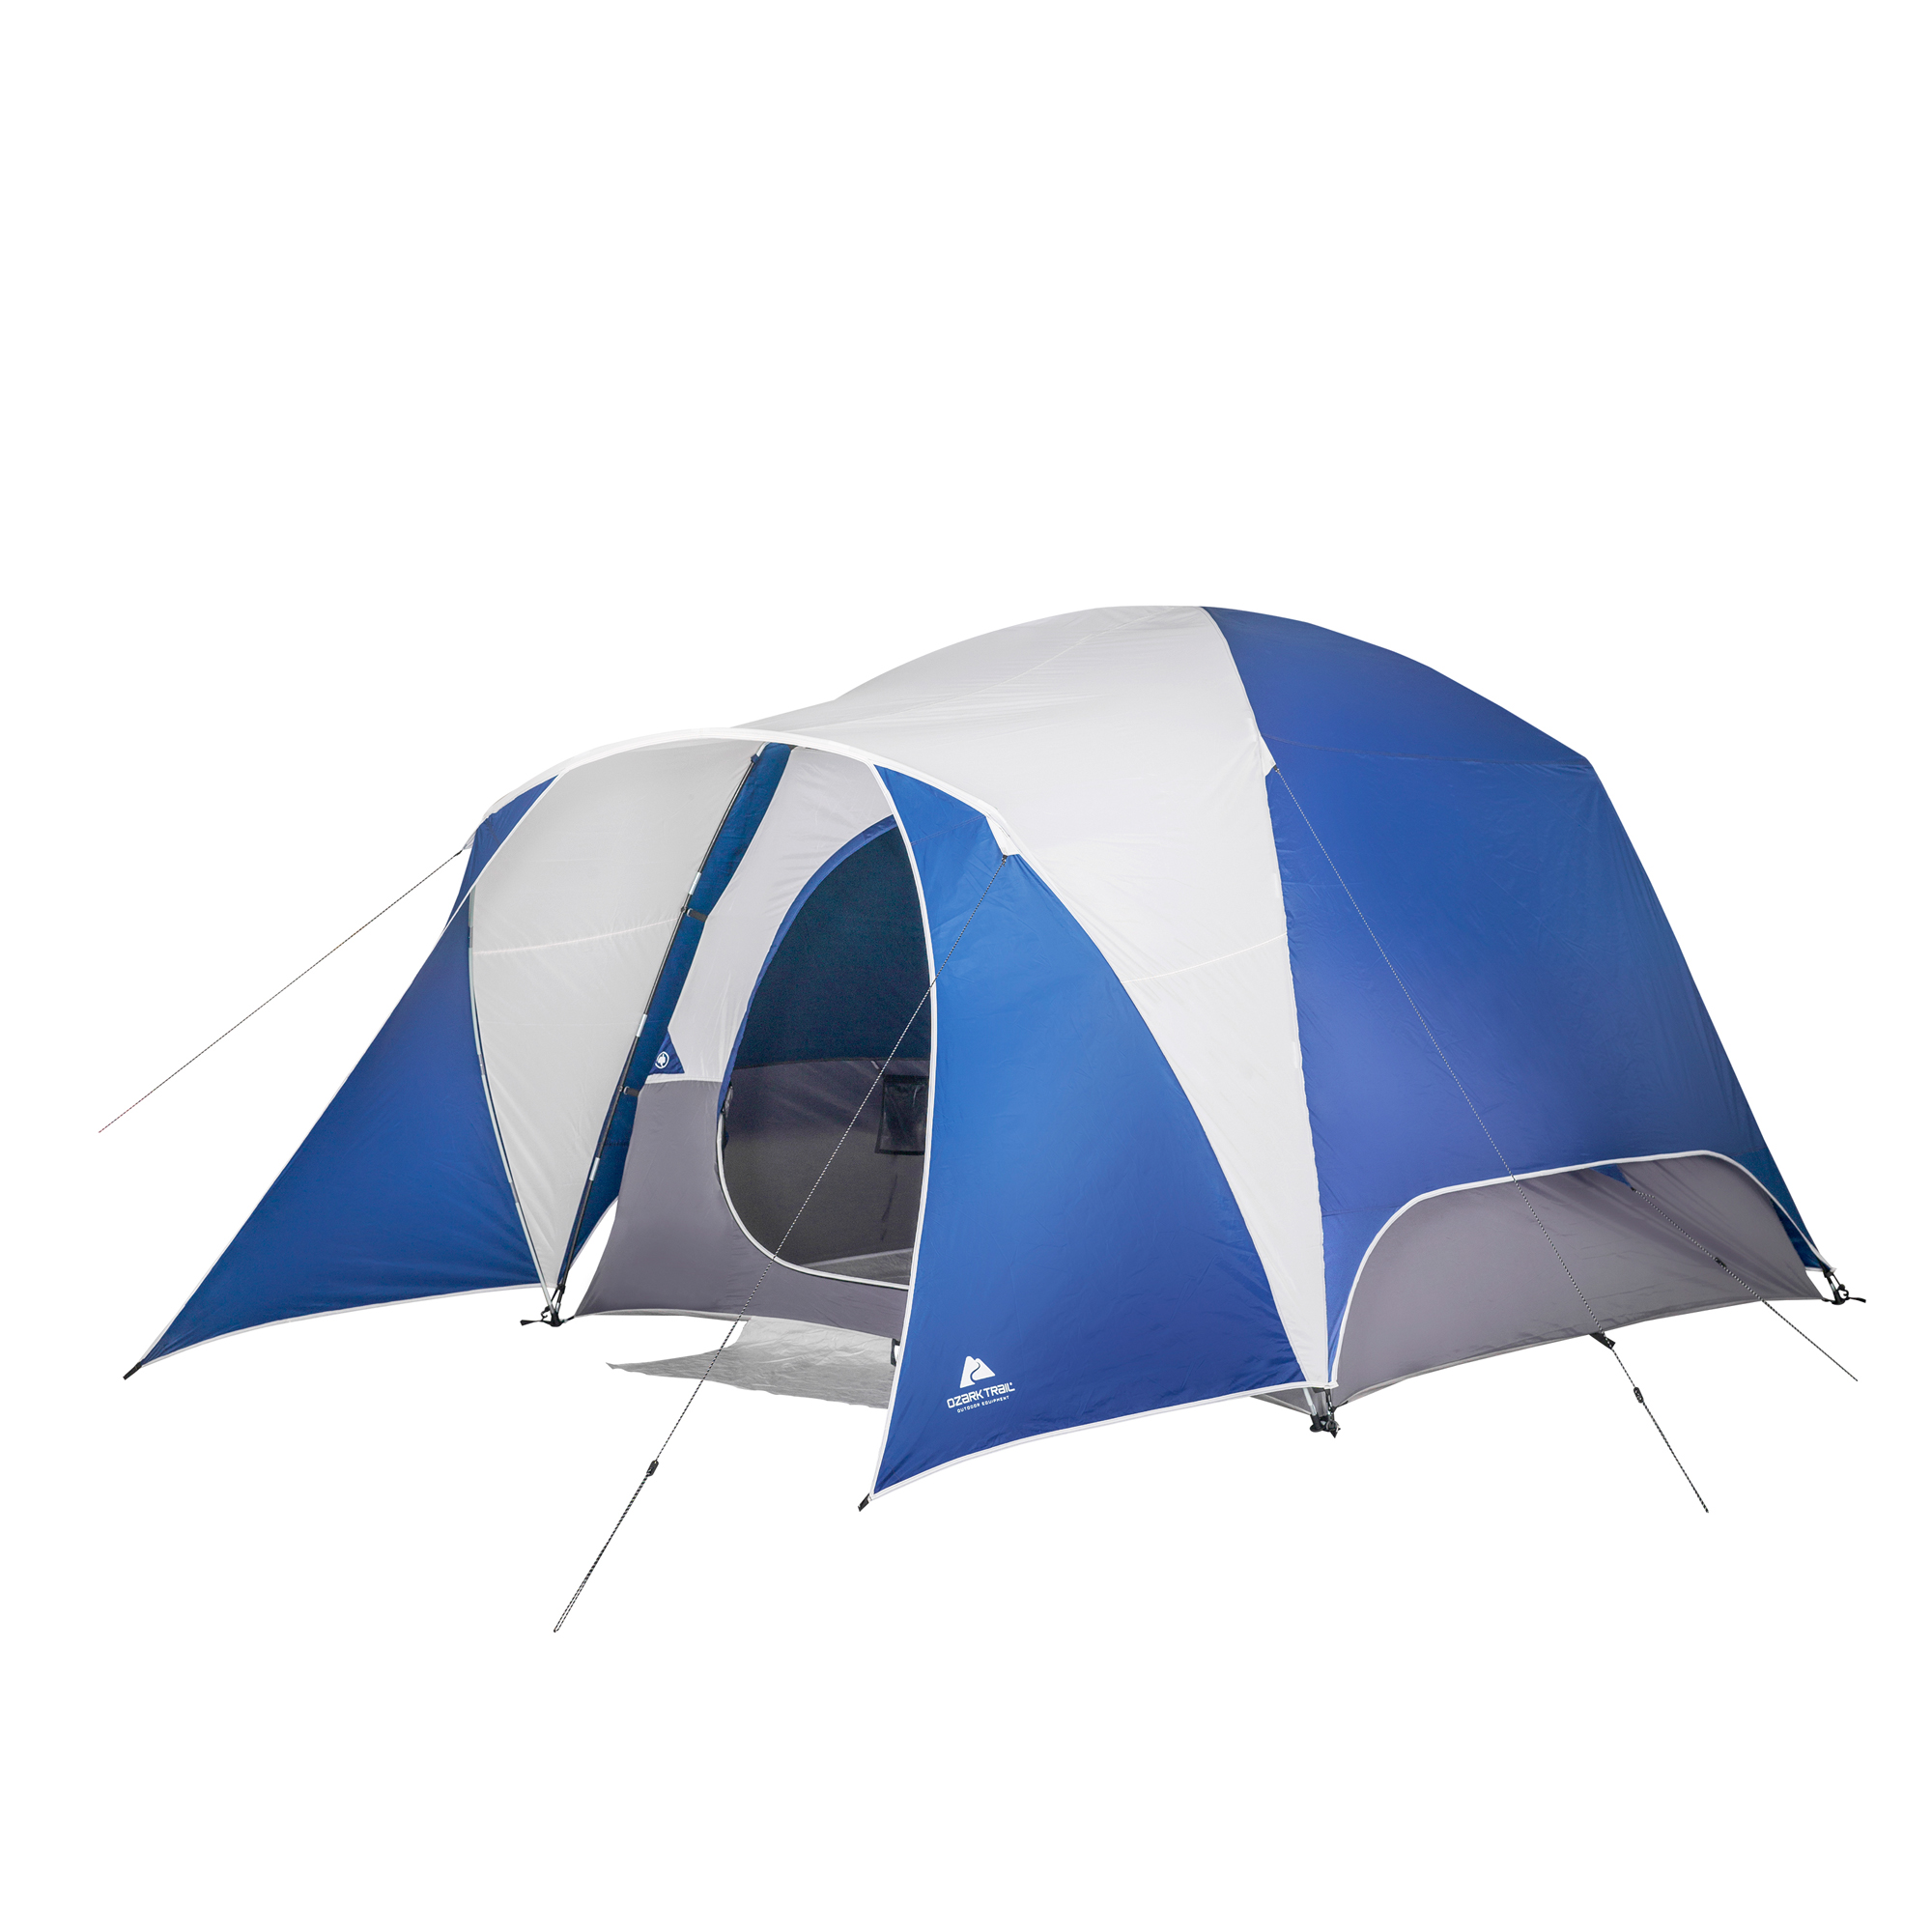 Ozark Trail 5-Person Dome Tent - image 1 of 10